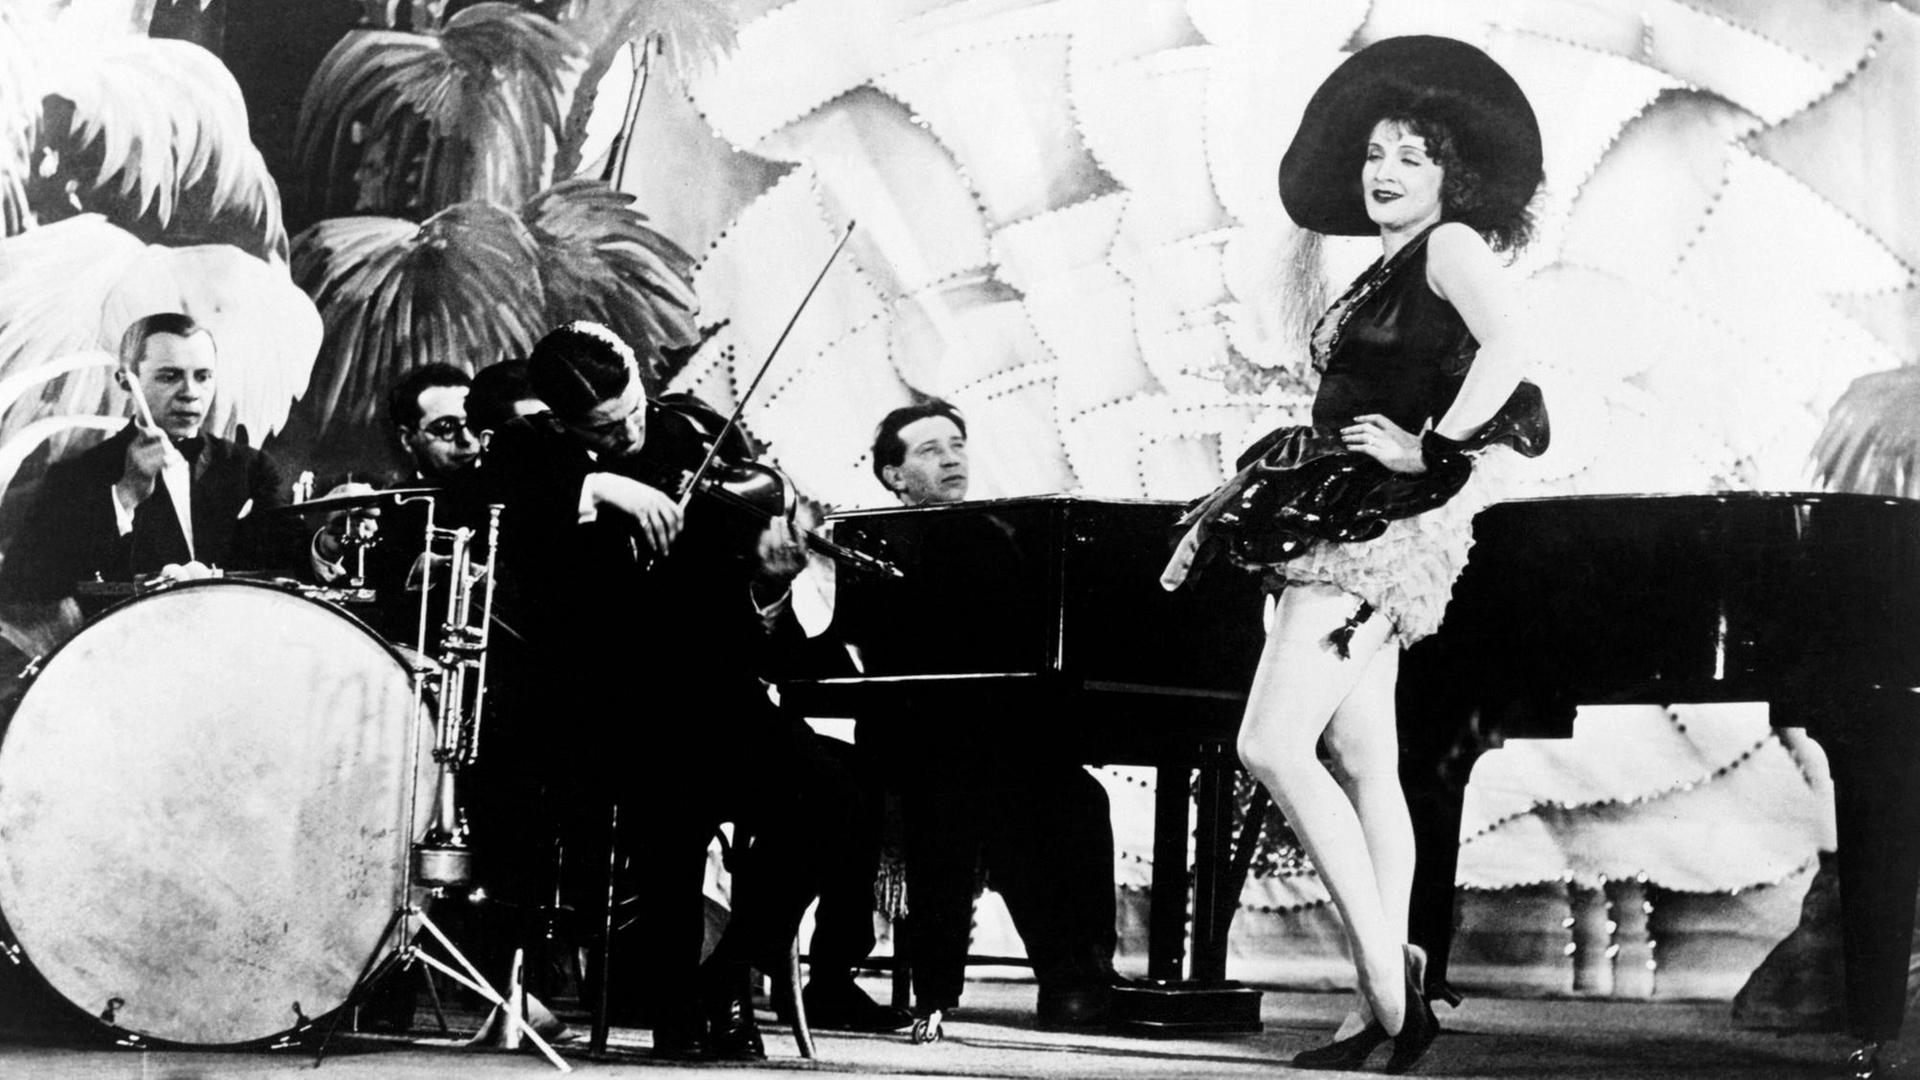 THE BLUE ANGEL, aka DER BLAUE ENGEL, Marlene Dietrich, right, accompanied by Die Weintraub Syncopators, and Friedrich Hollaender, on piano, 1930 Courtesy Everett Collection PUBLICATIONxINxGERxSUIxAUTxONLY Copyright: xCourtesyxEverettxCollectionx MBDBLAN EC111